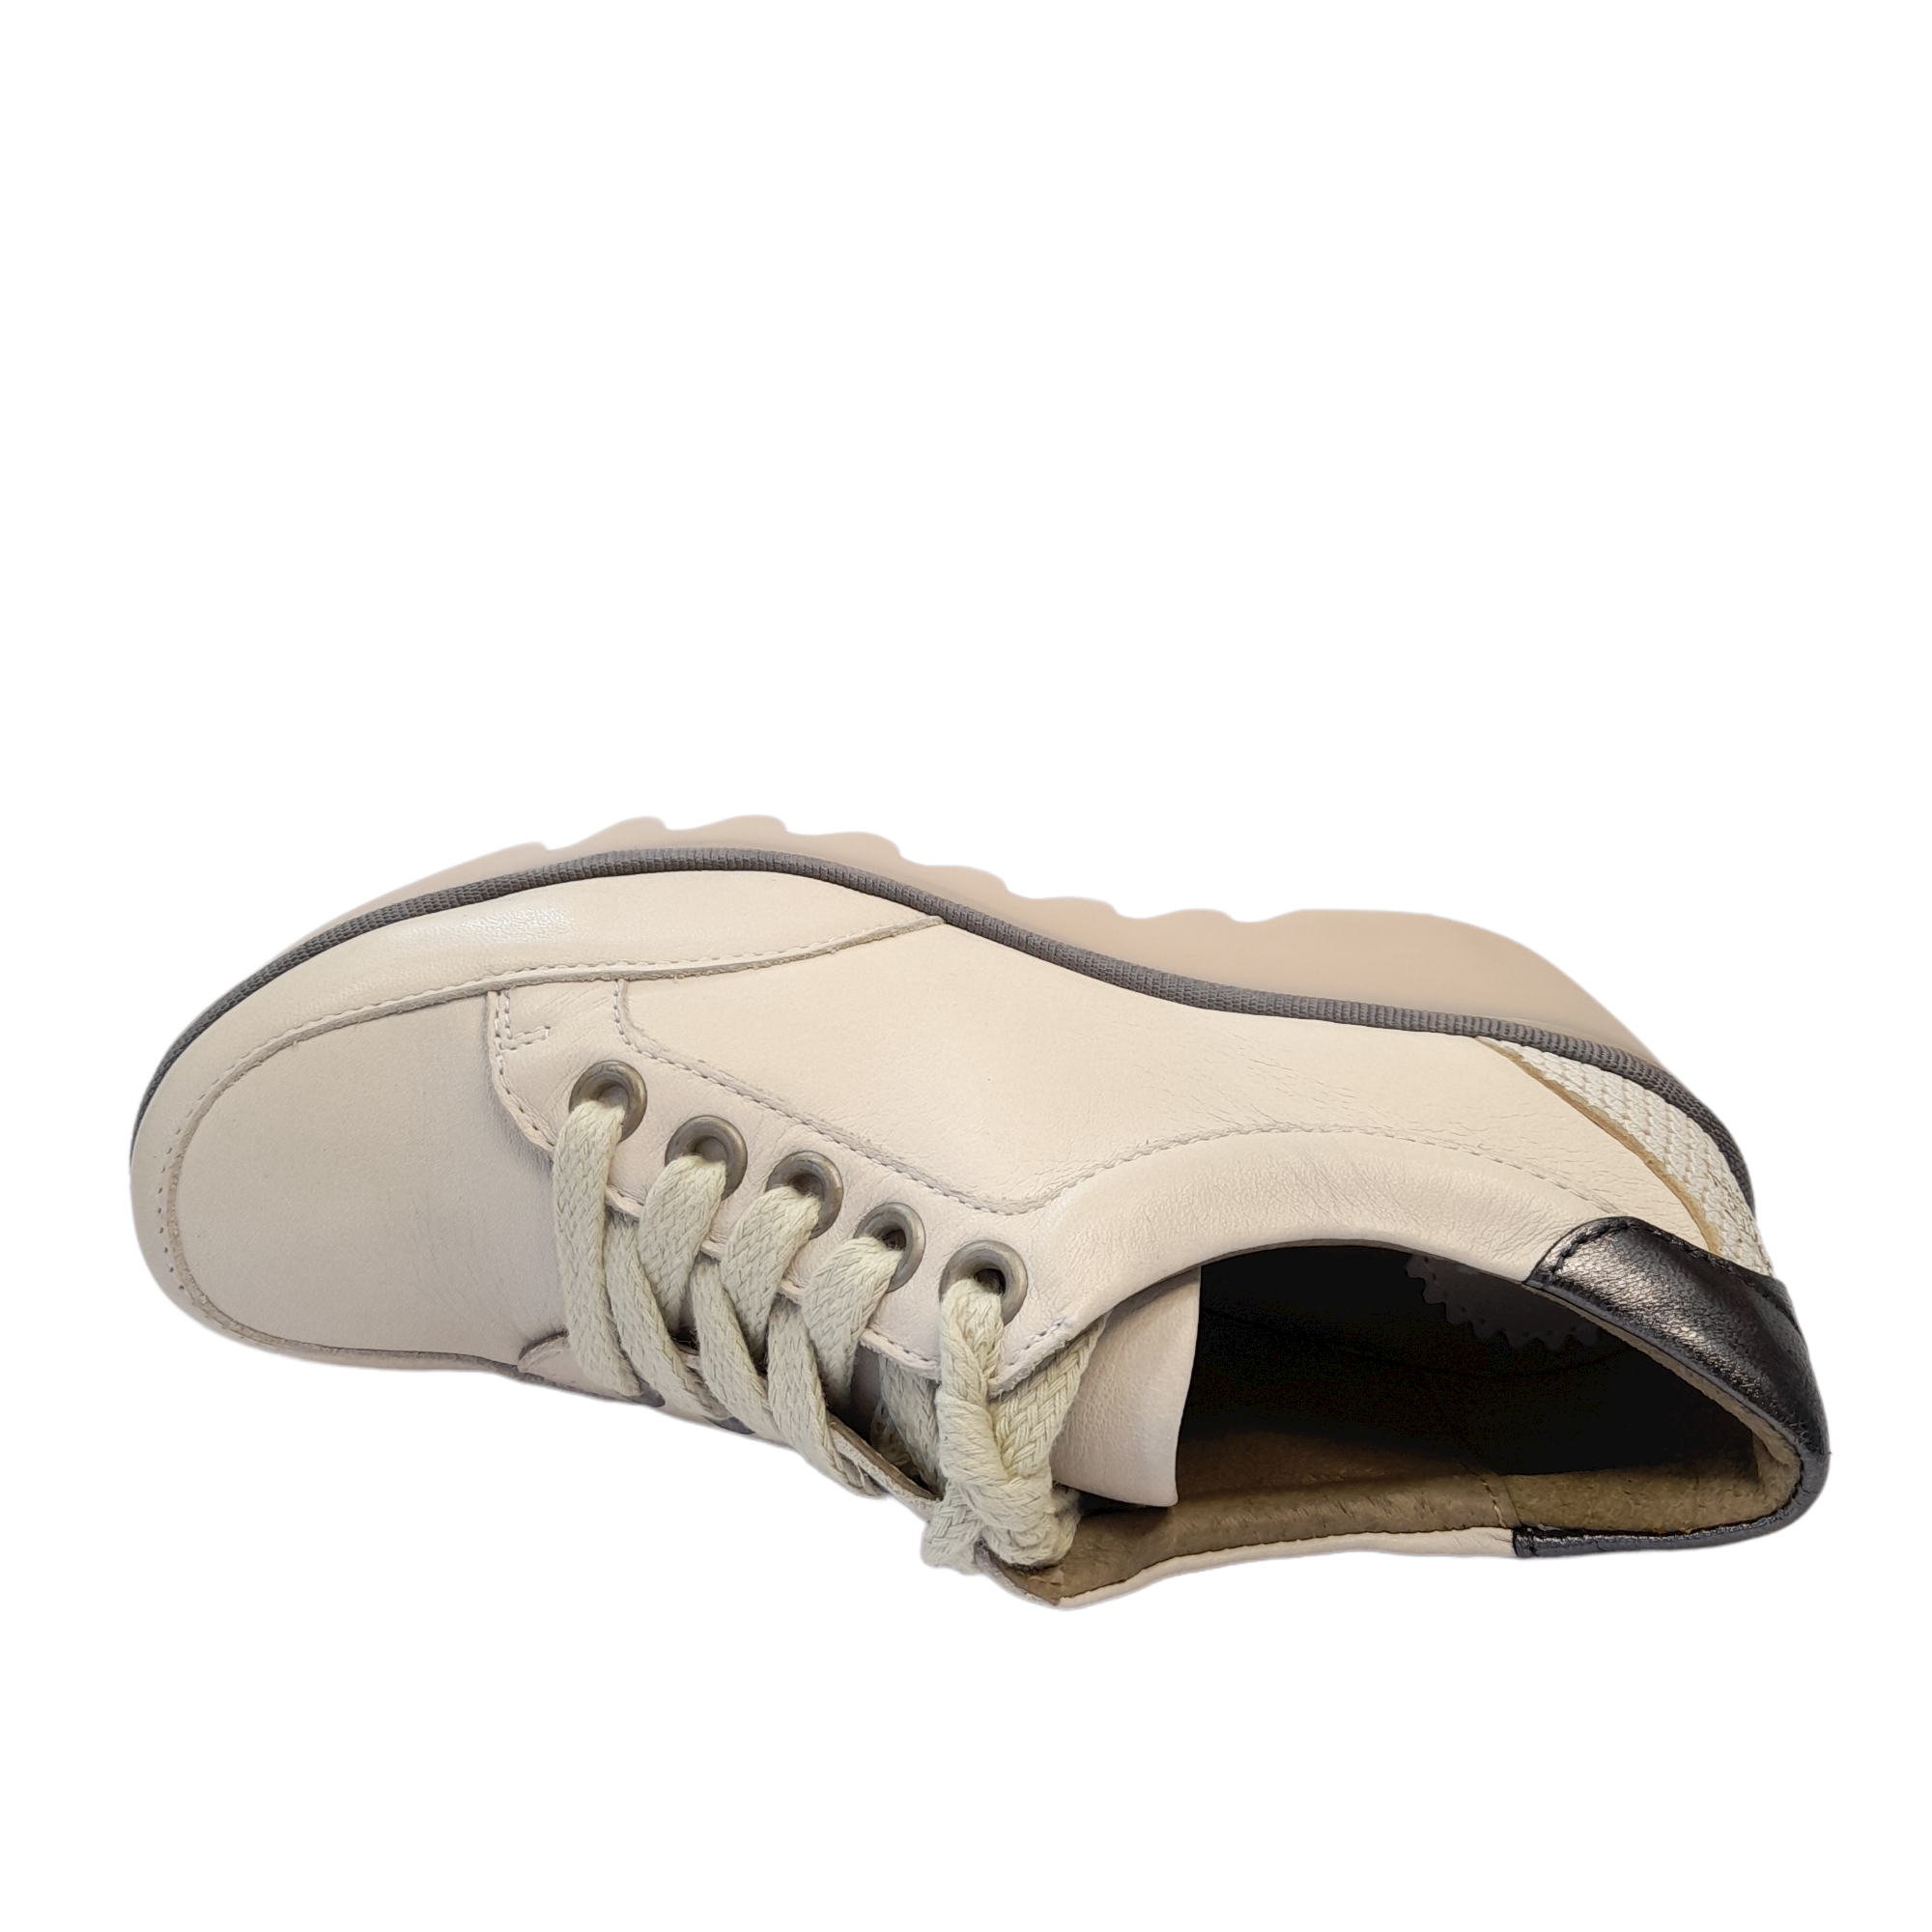 FLW22-Bino - shoe&amp;me - Fly London - Sneaker - Shoes, Sneakers, Wedges, Winter 2022, Womens